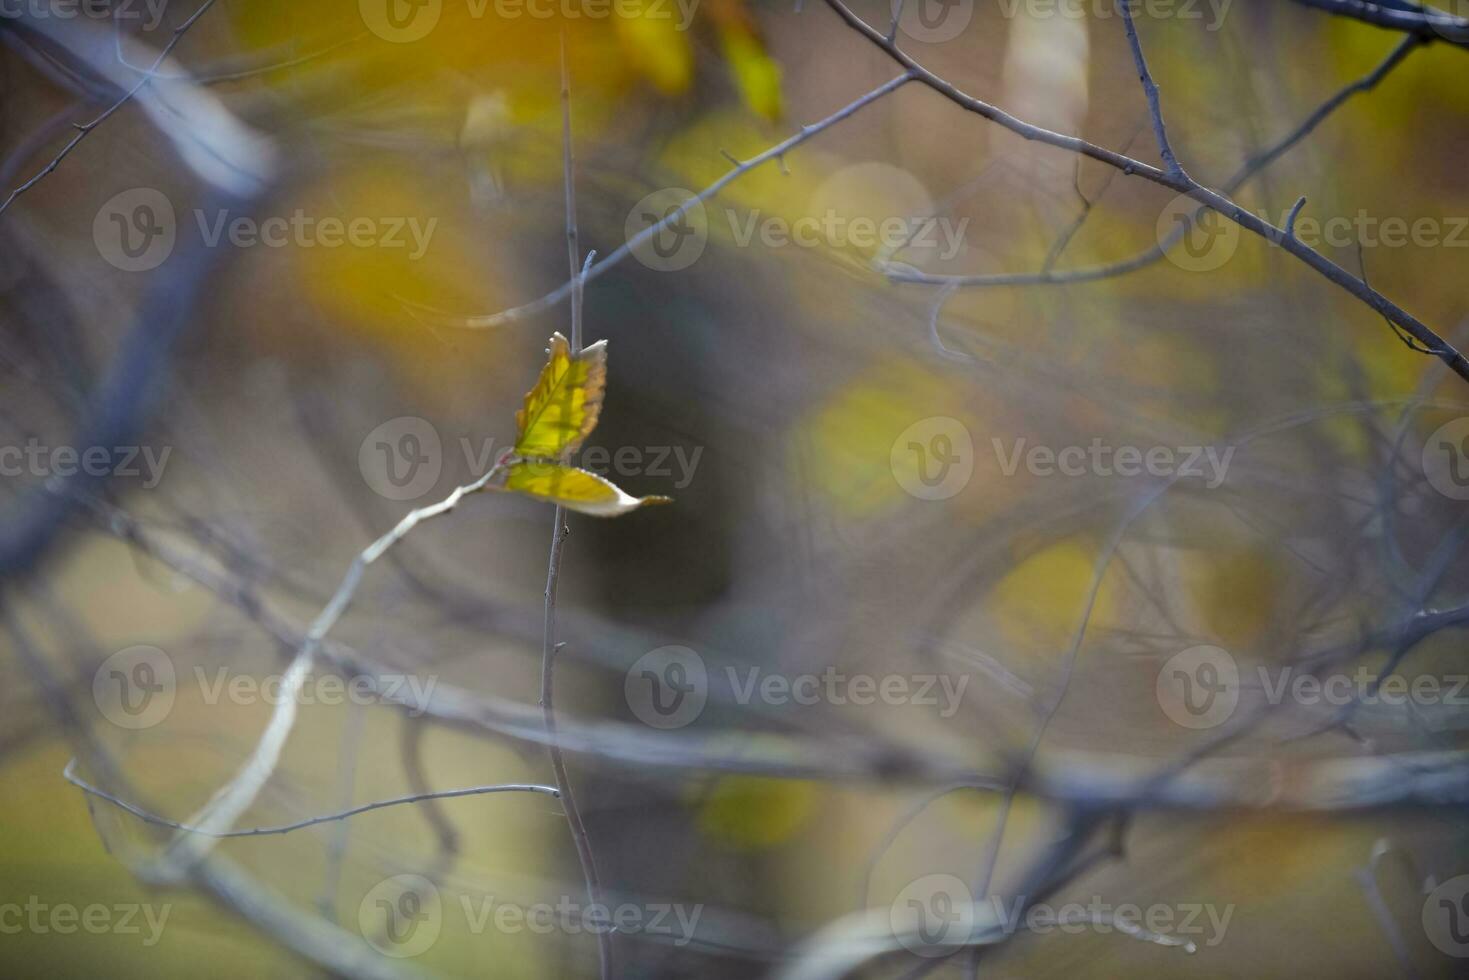 herfst bladeren in de Woud, la pampa provincie, Patagonië, Argentinië. foto